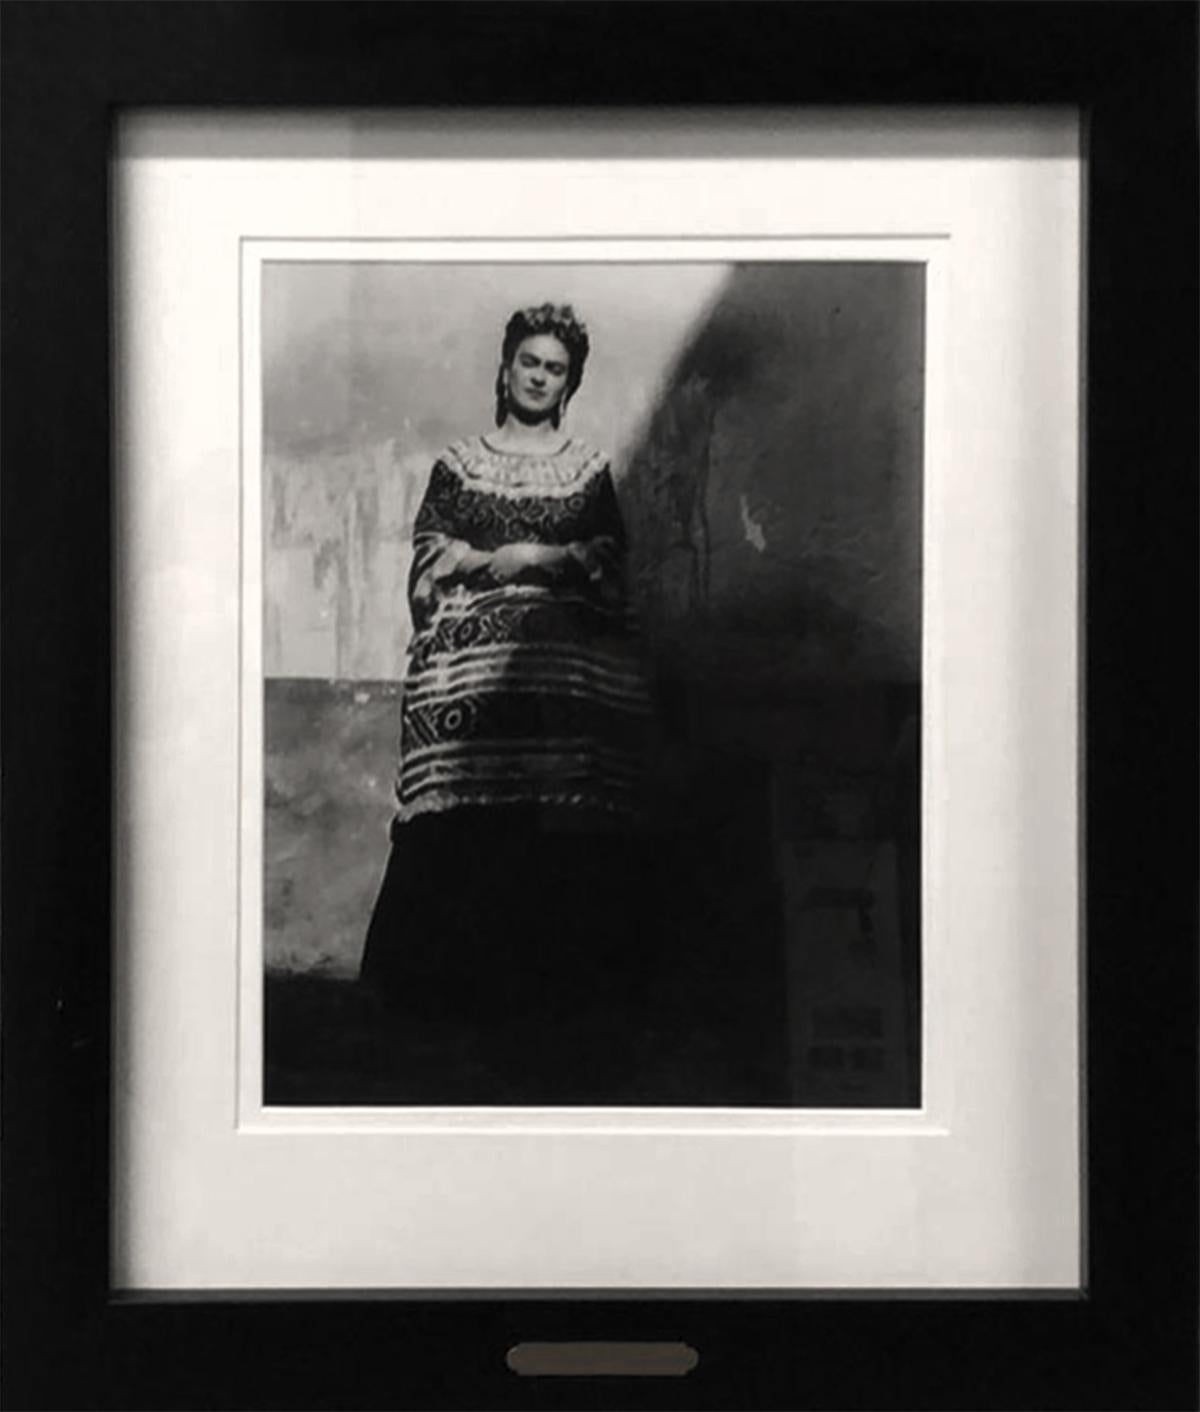 Frida Kahlo en la casa azul, Coyoacán México. Platinum edition.. B & W Portrait - Photograph by Leo Matiz